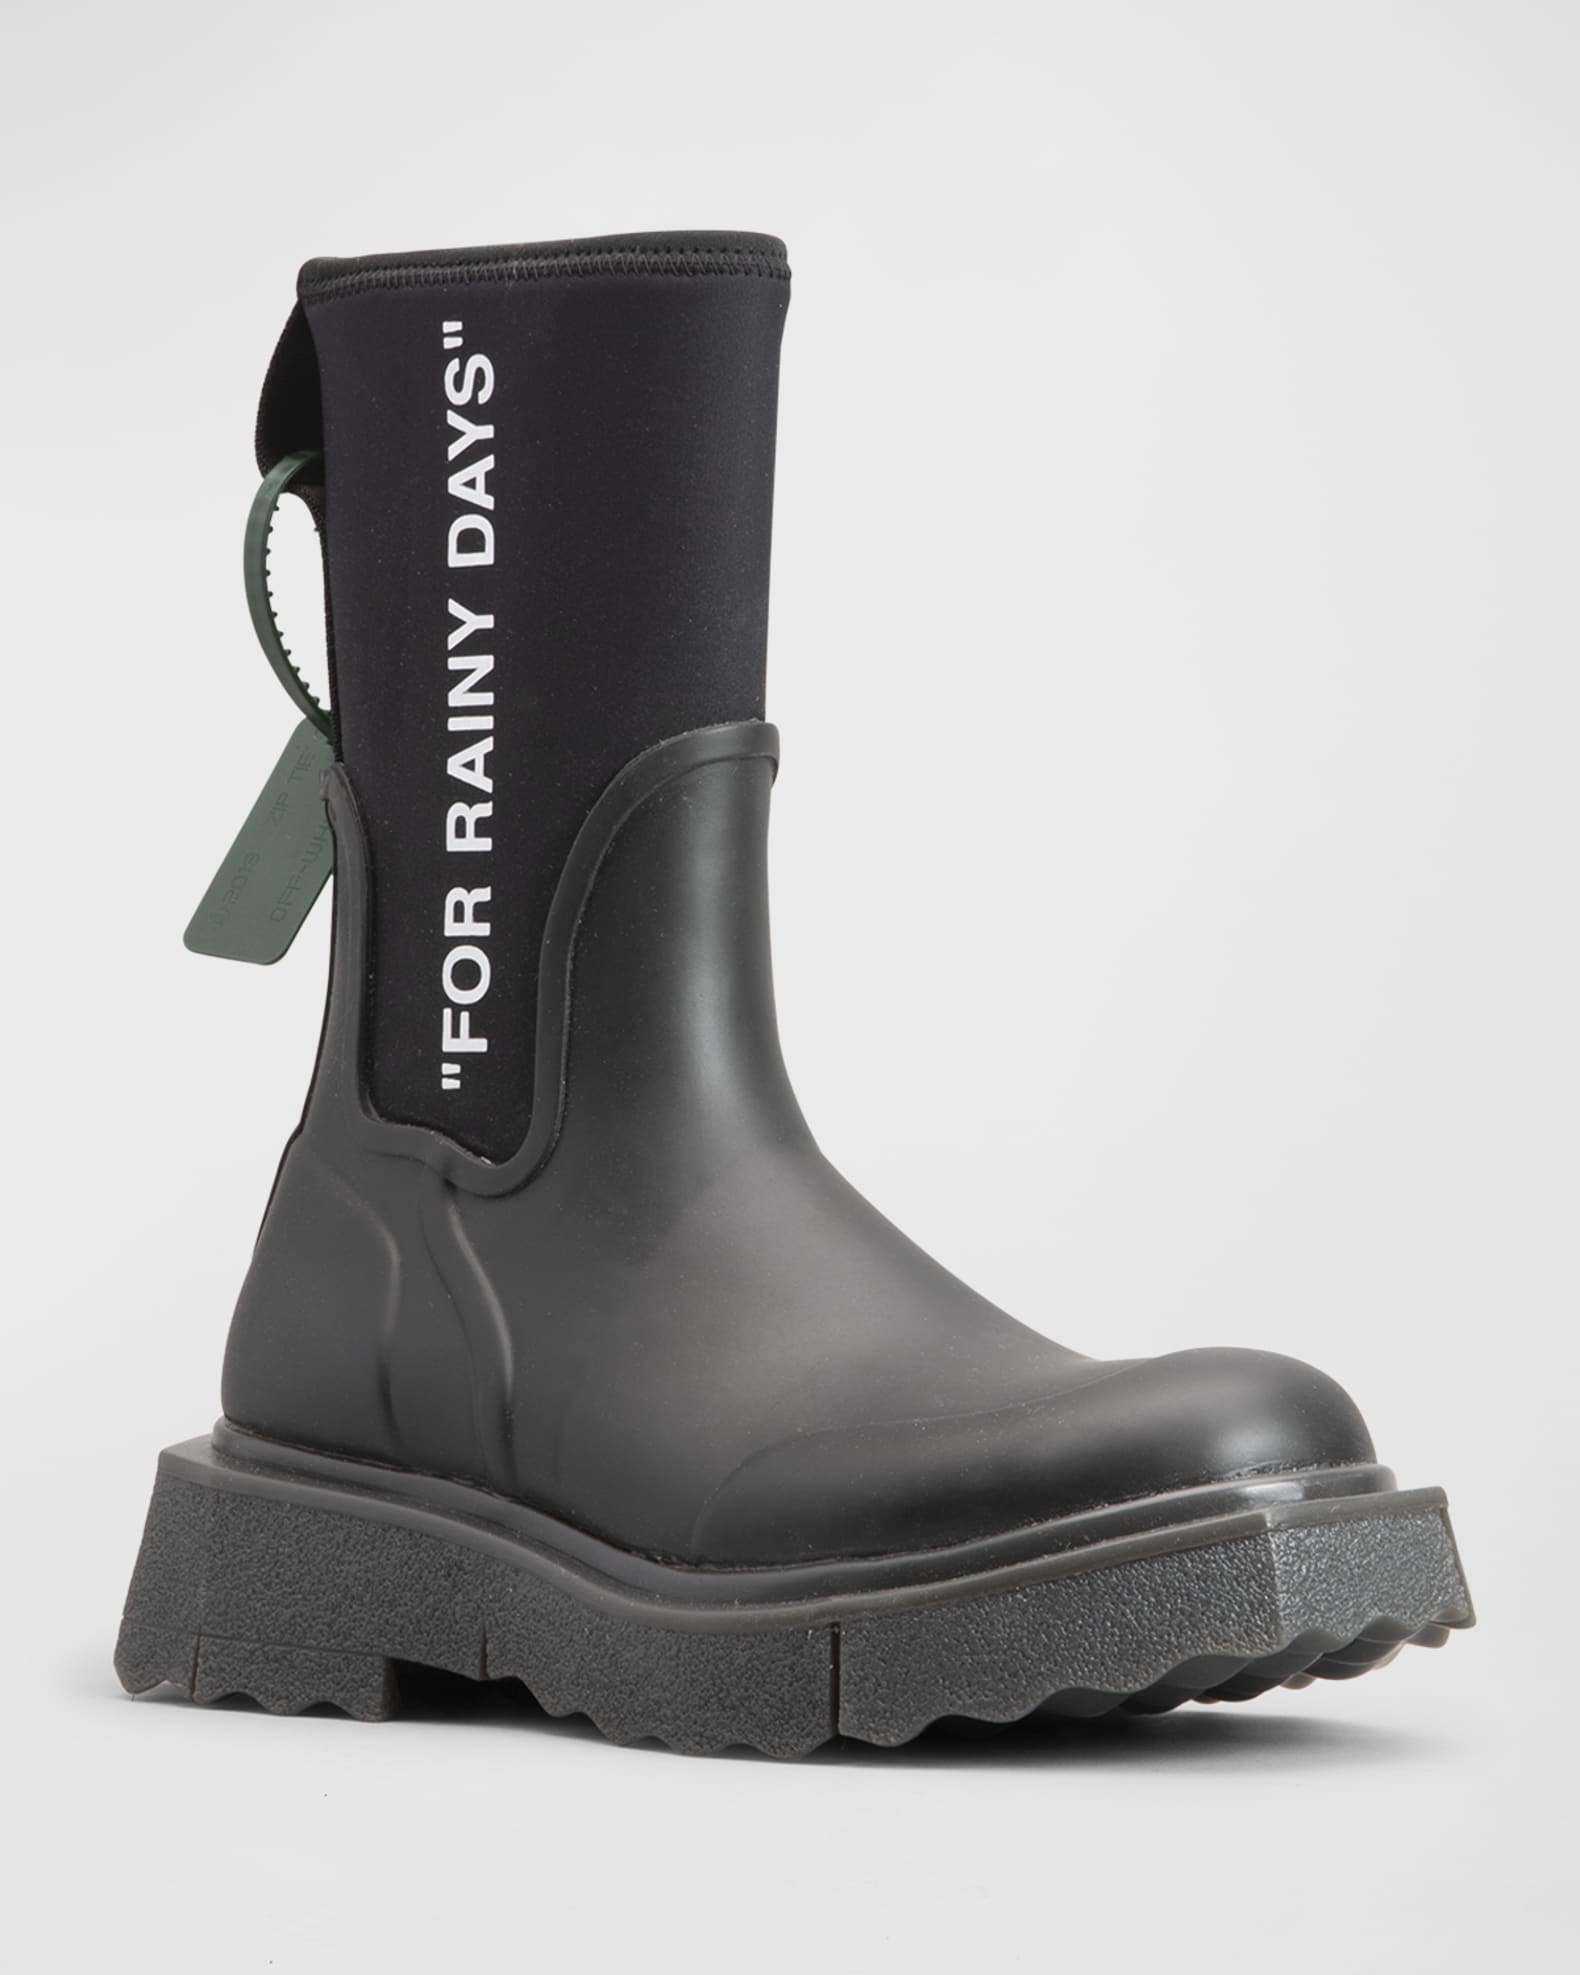 Off-White Sponge For Rainy Days Rain Boots | Neiman Marcus